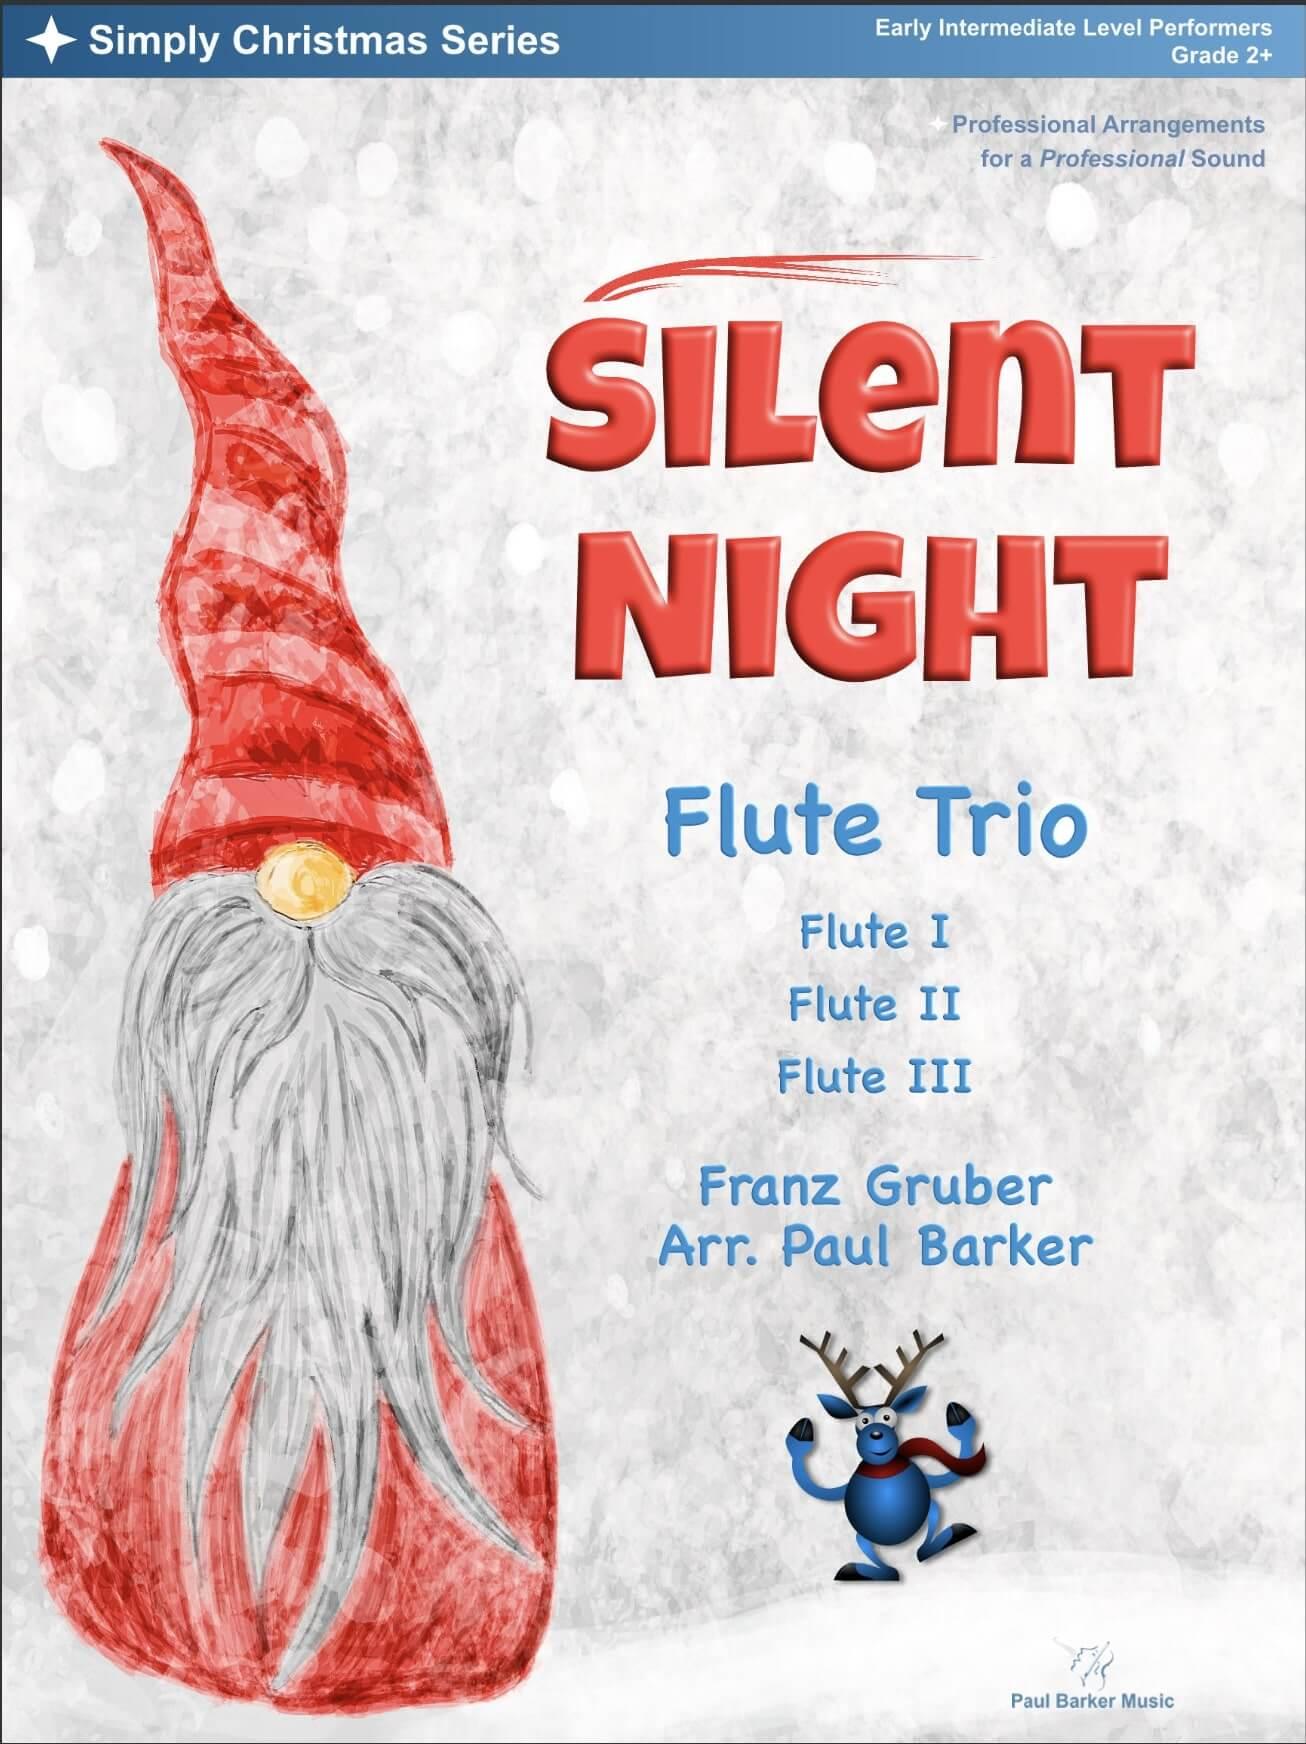 Silent Night (Flute Trio) - Paul Barker Music 